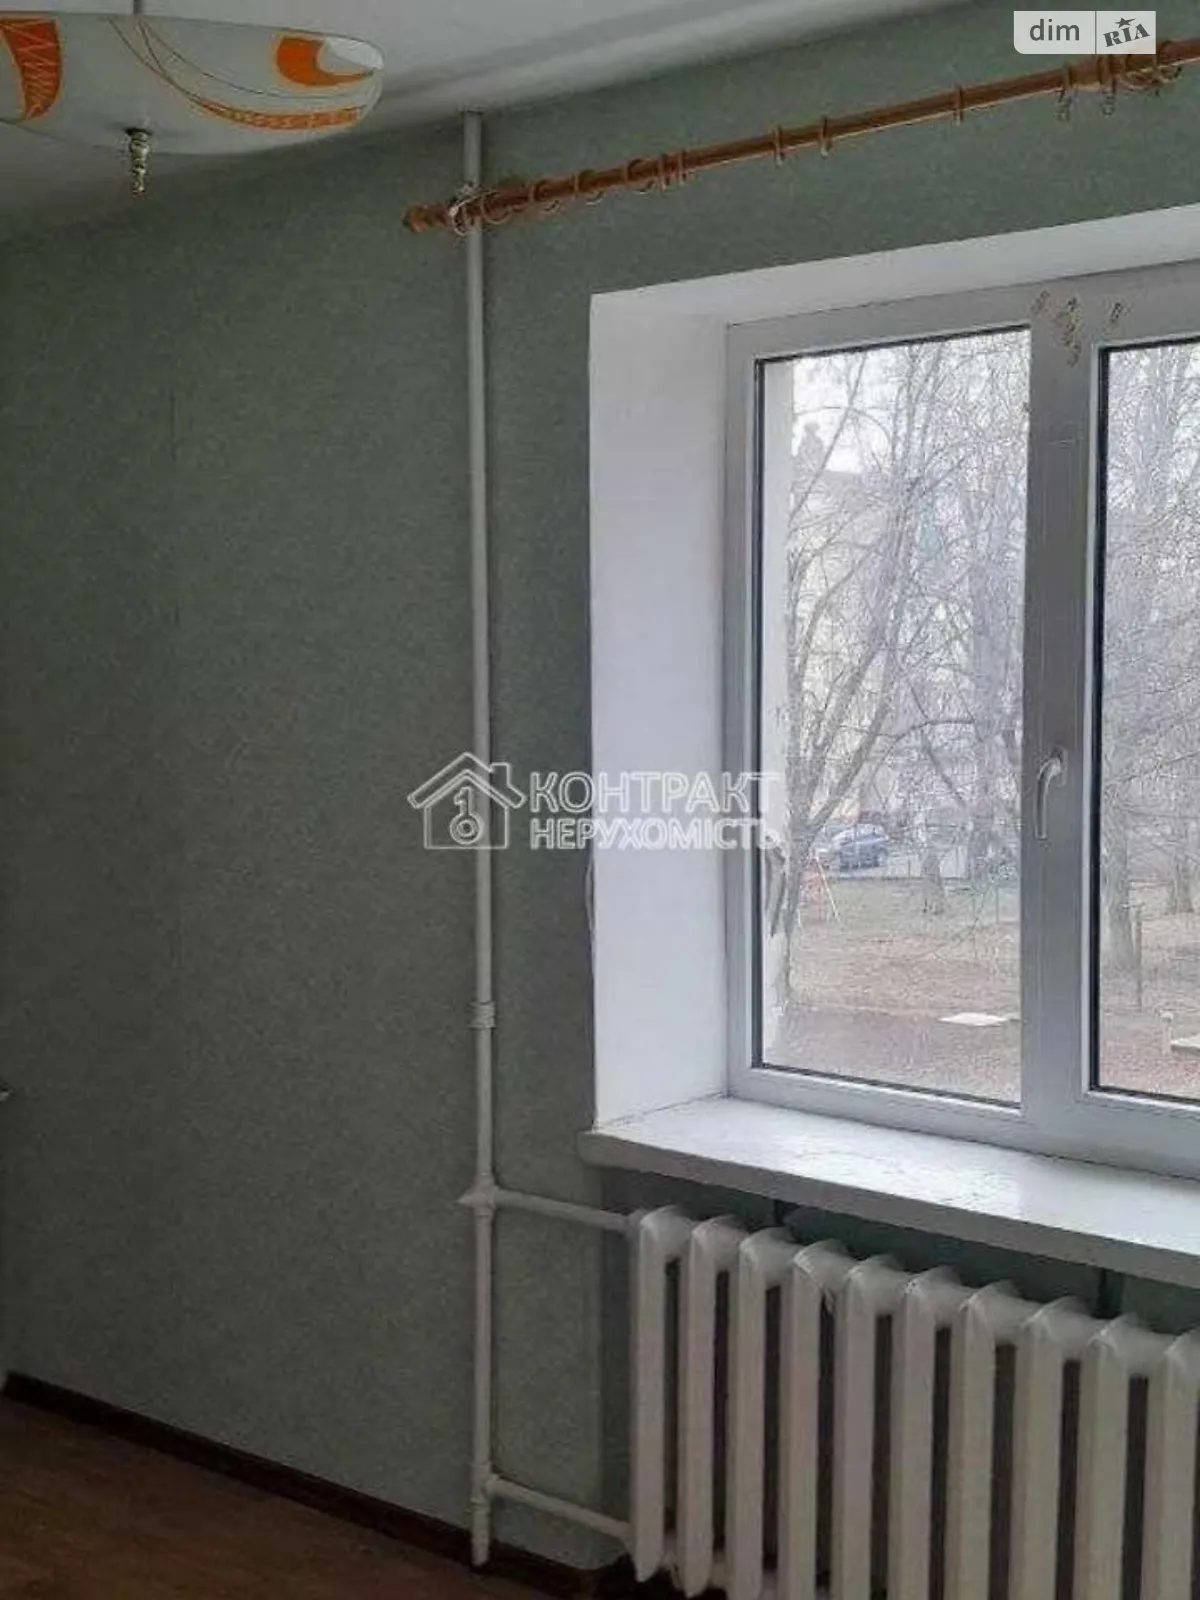 Сдается в аренду 2-комнатная квартира 45.8 кв. м в Харькове, цена: 5000 грн - фото 1